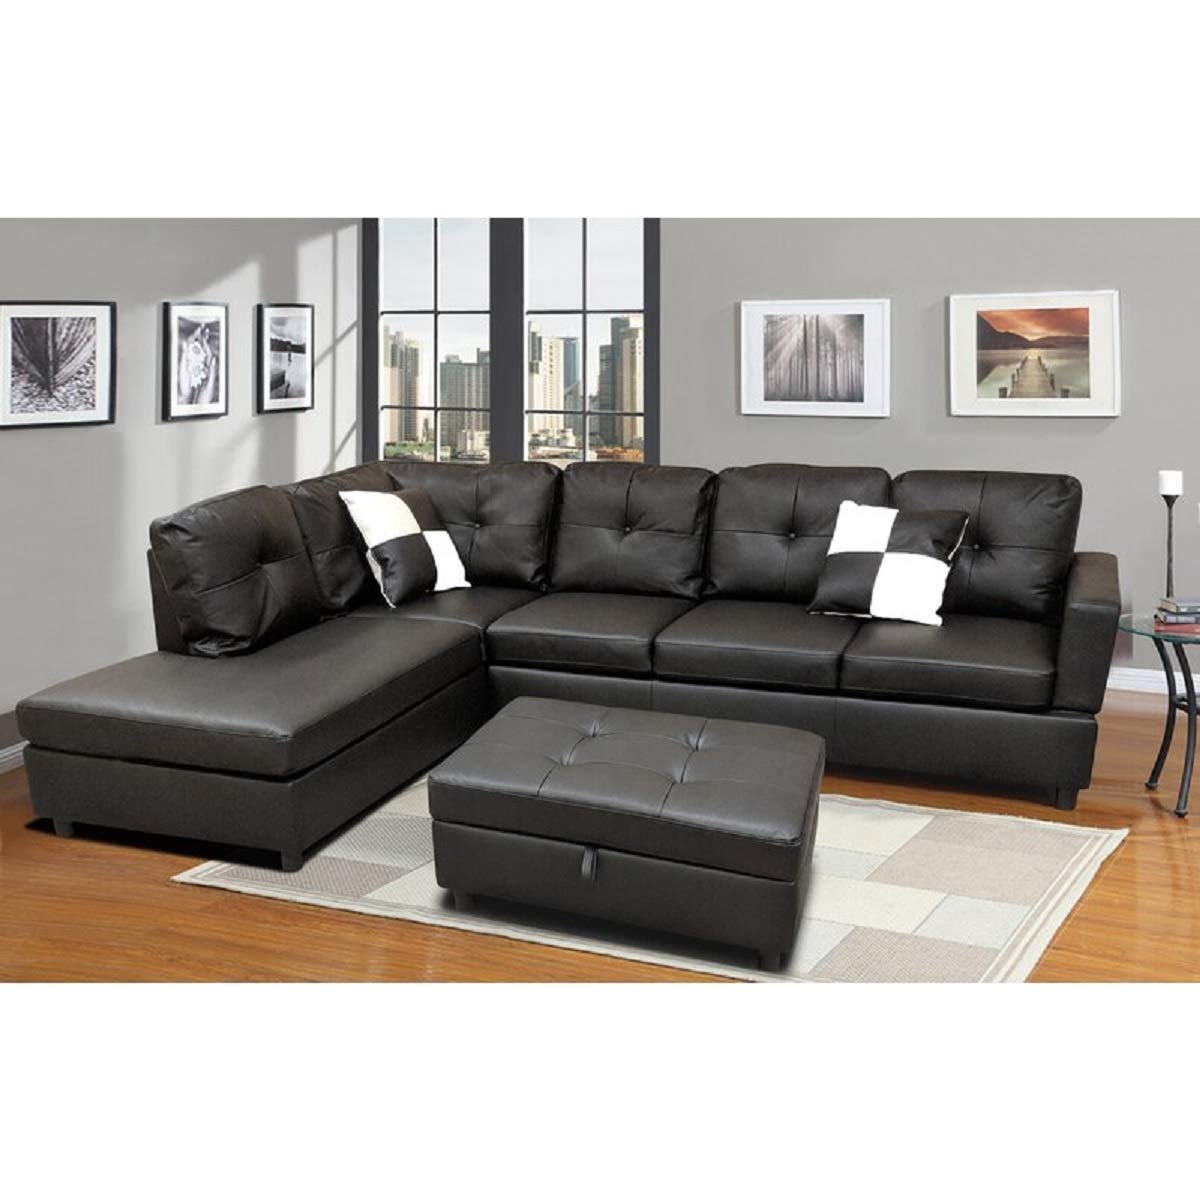 Designer Sofa Set:- Paes 3+2+1 Leatherette Luxury Furniture Sofa Set (Black)